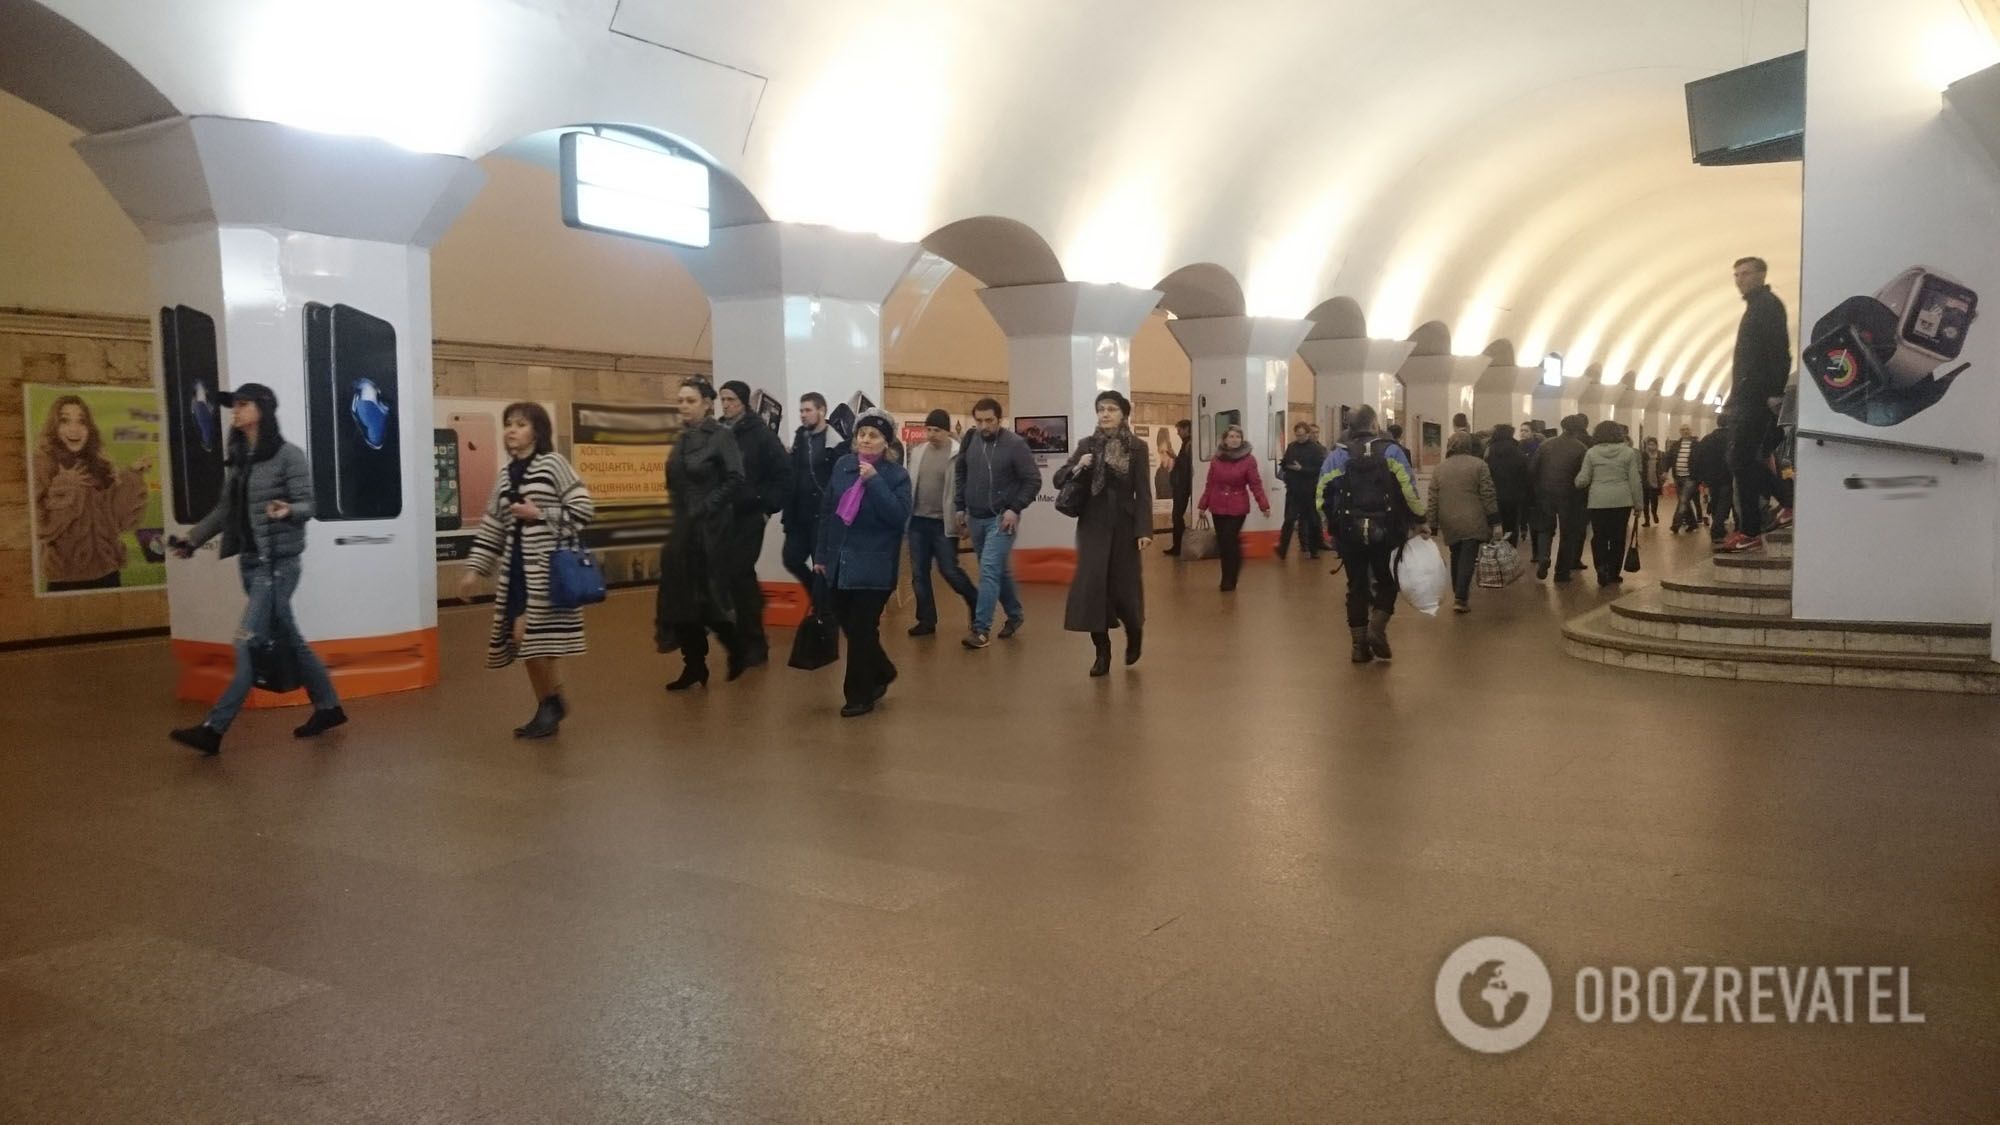 Станция метро "Майдан незалежности", апрель 2018 года